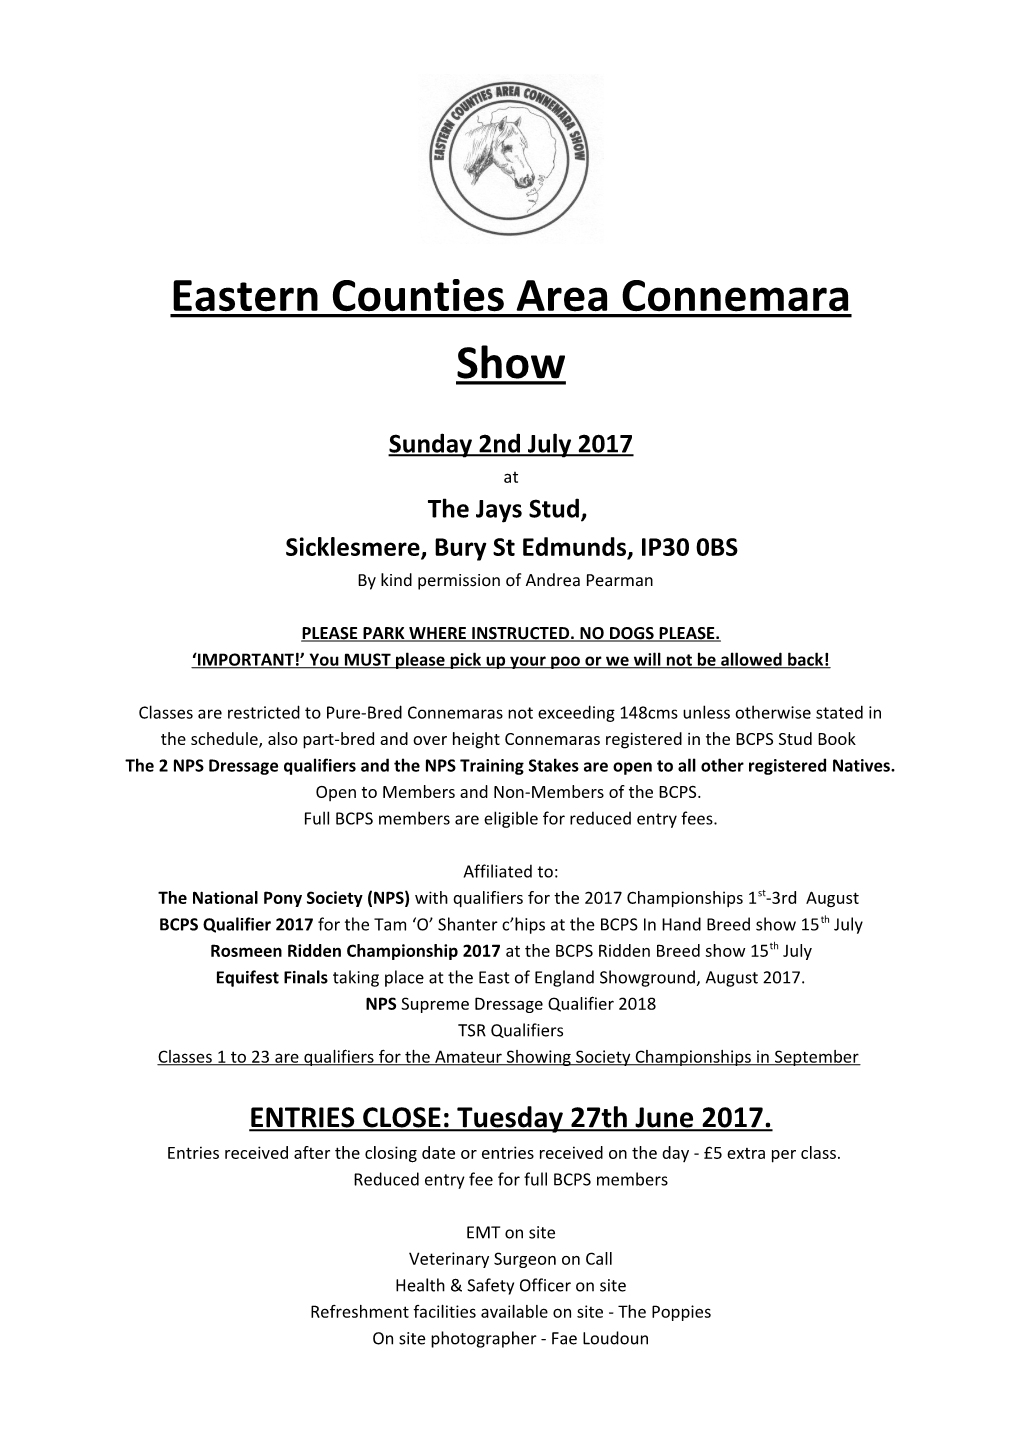 Eastern Counties Area Connemara Show